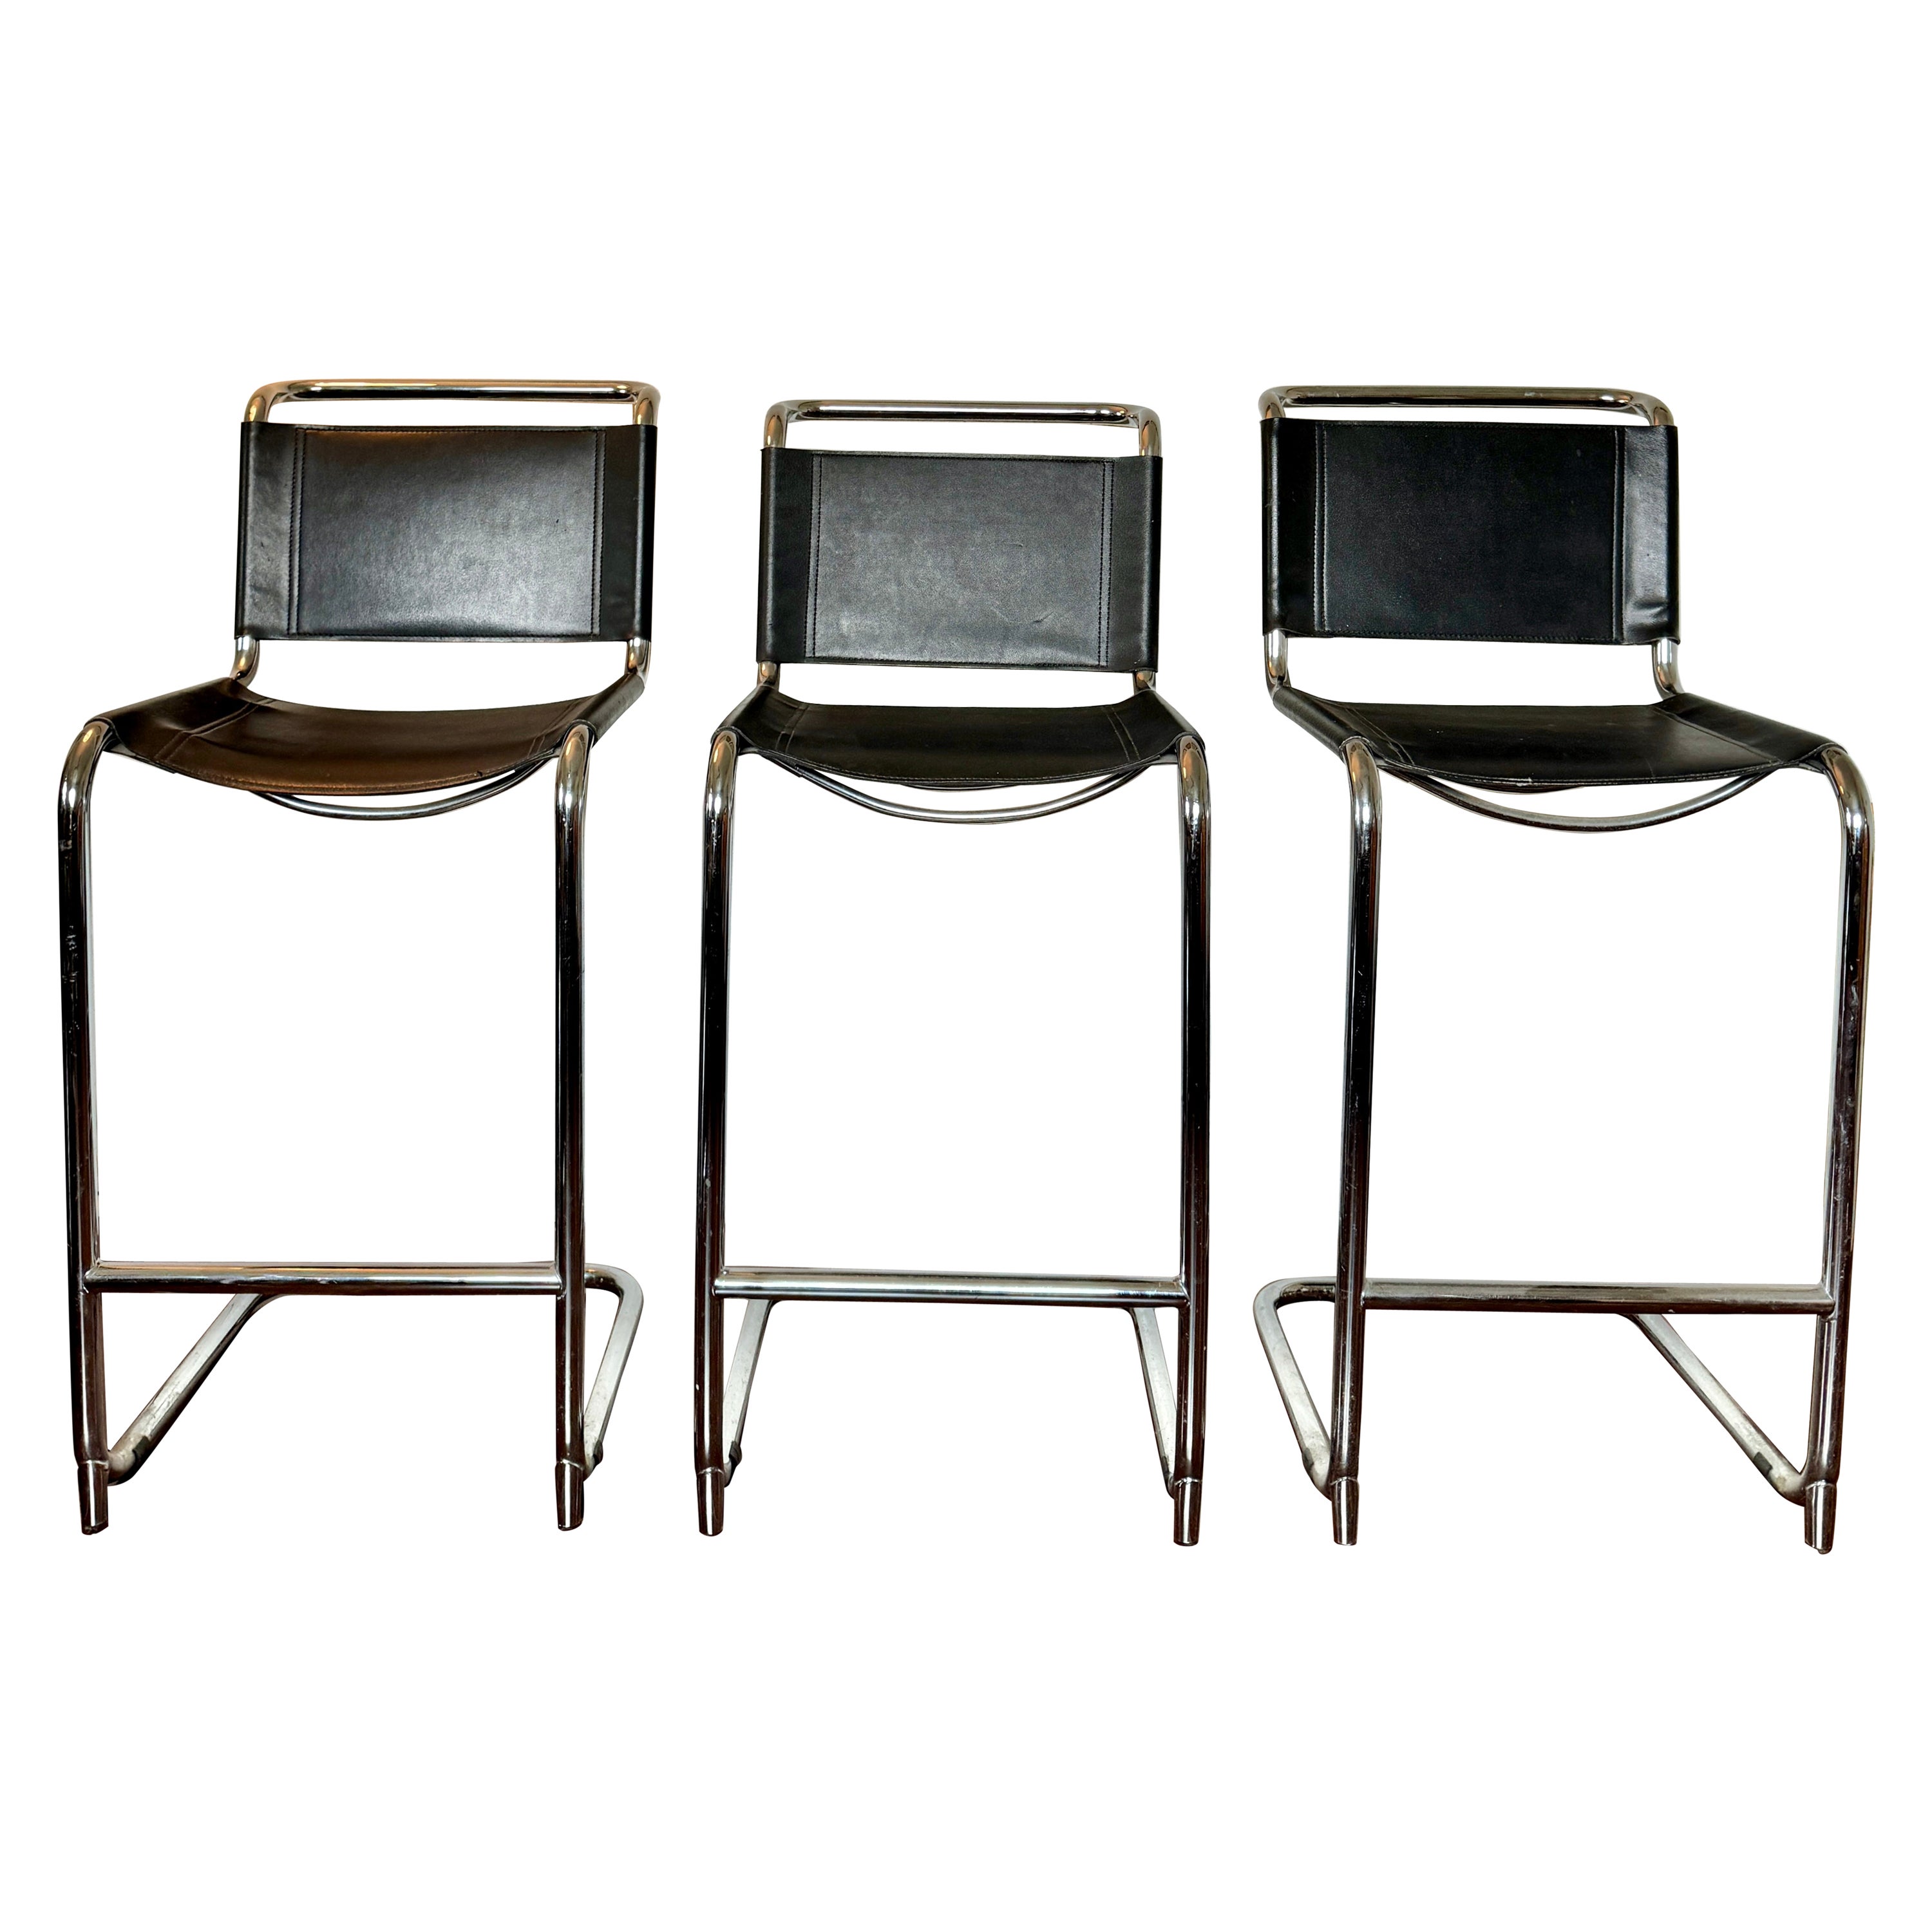 A set of 3 post modern bar stools by Mart Stam, circa 1980s. Chromed tubular For Sale